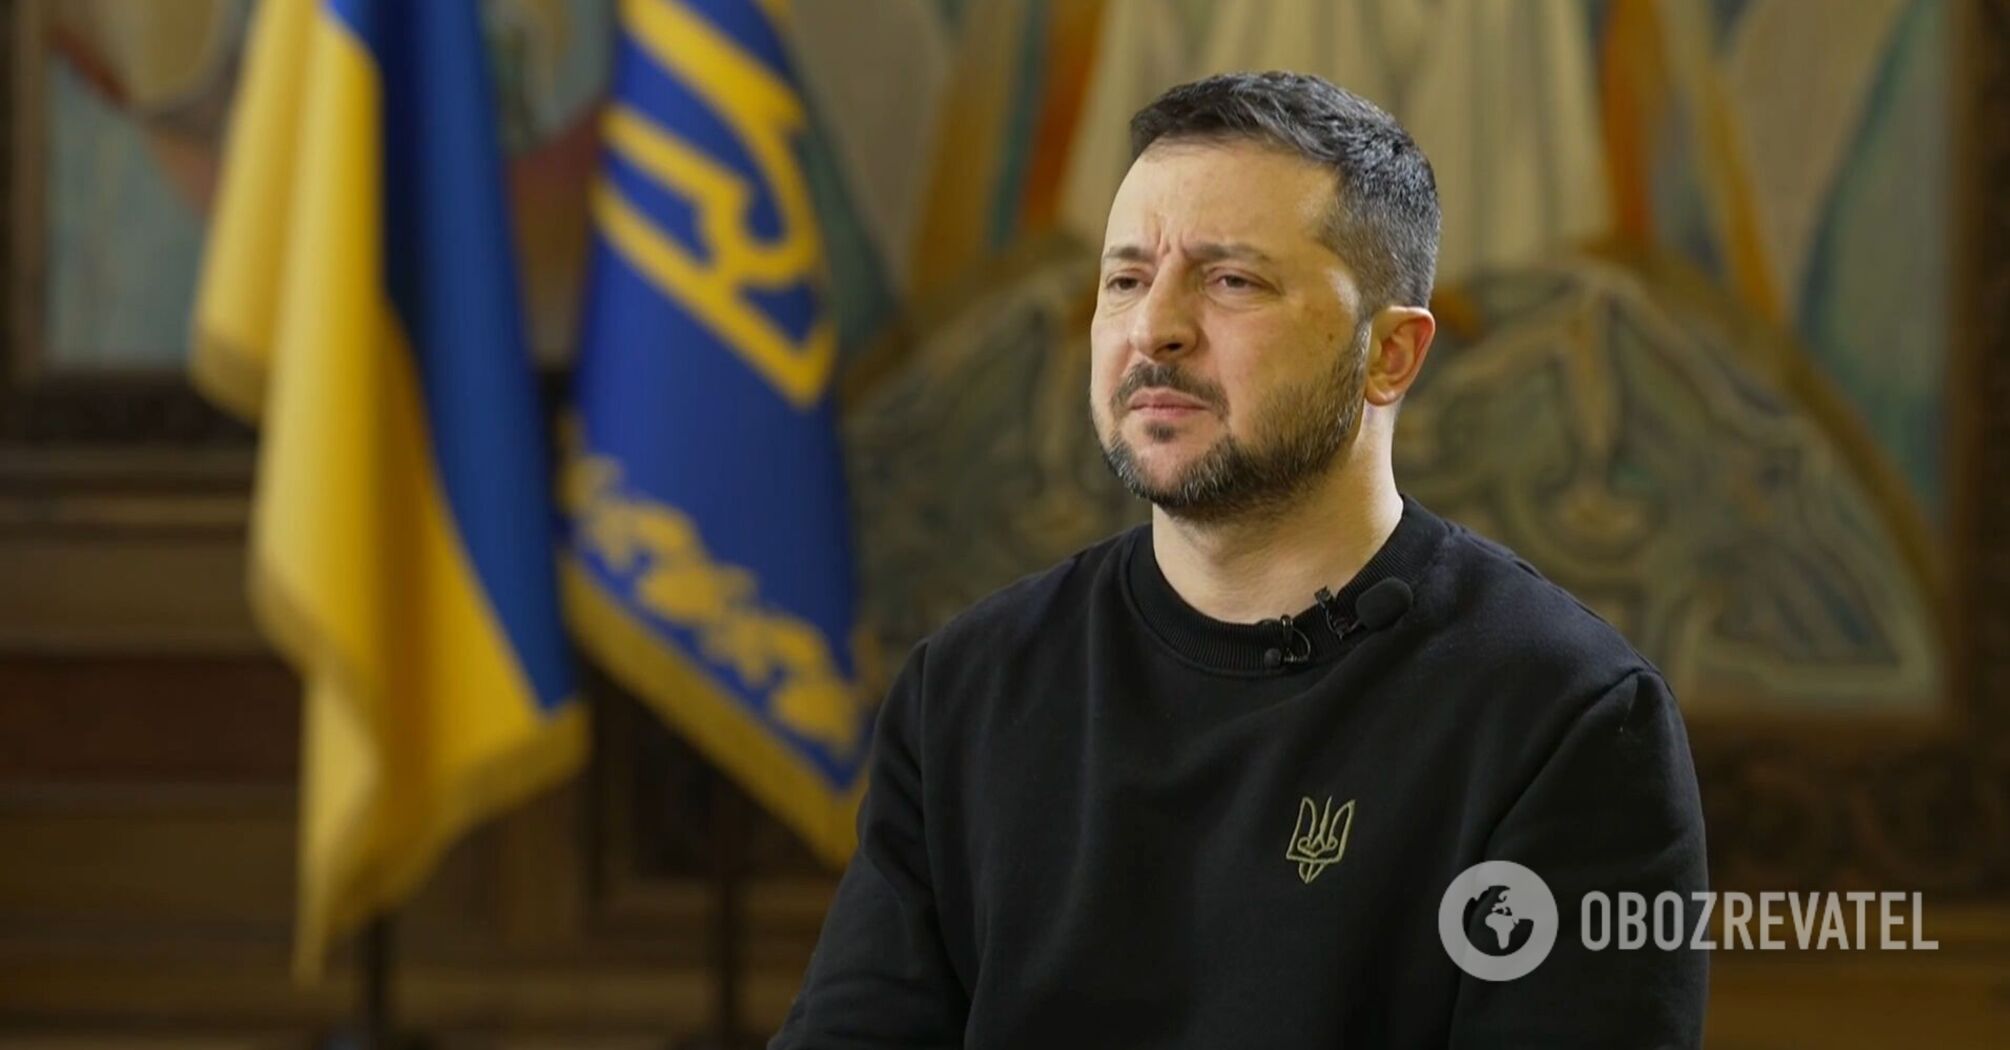 Zelenskyy: Relations between Ukraine and Britain do not depend on who is in power